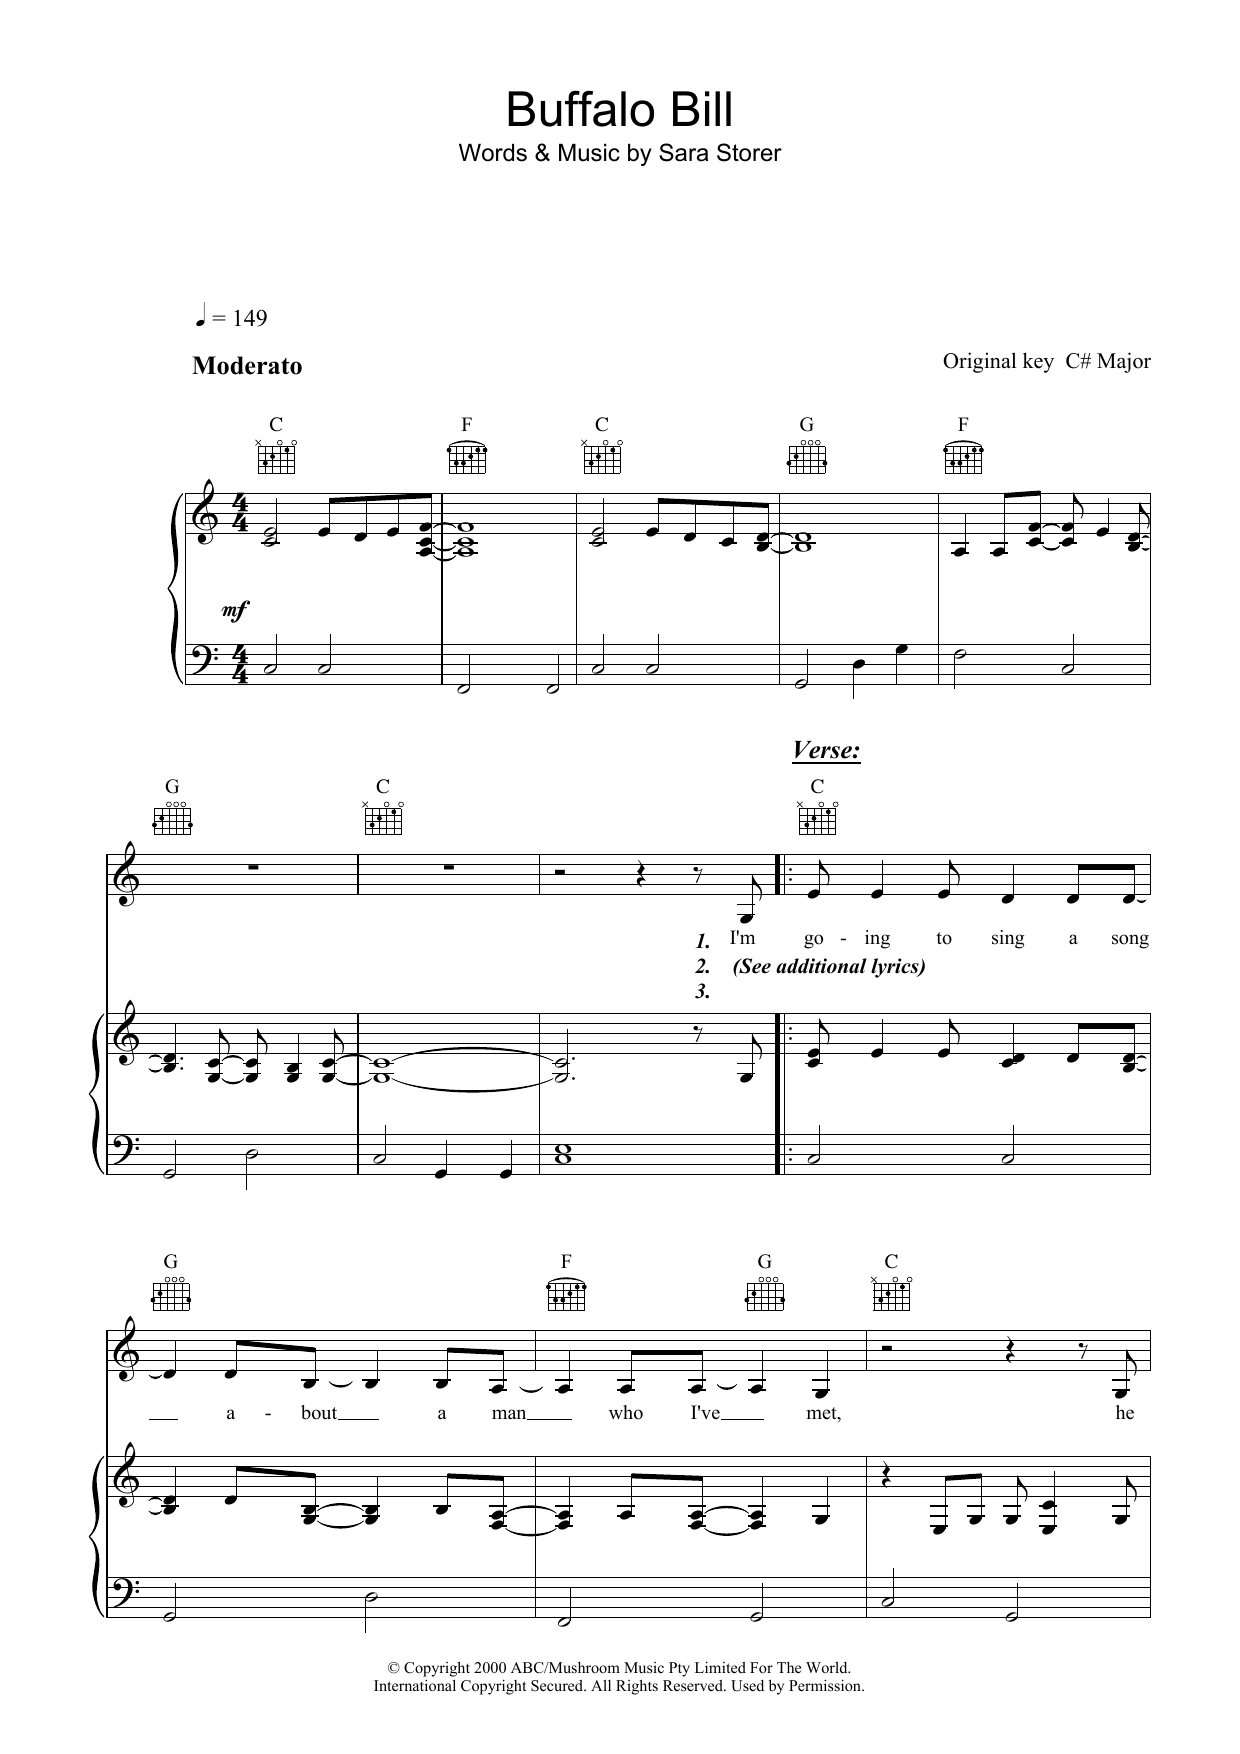 Sara Storer Buffalo Bill Sheet Music Notes & Chords for Piano, Vocal & Guitar (Right-Hand Melody) - Download or Print PDF